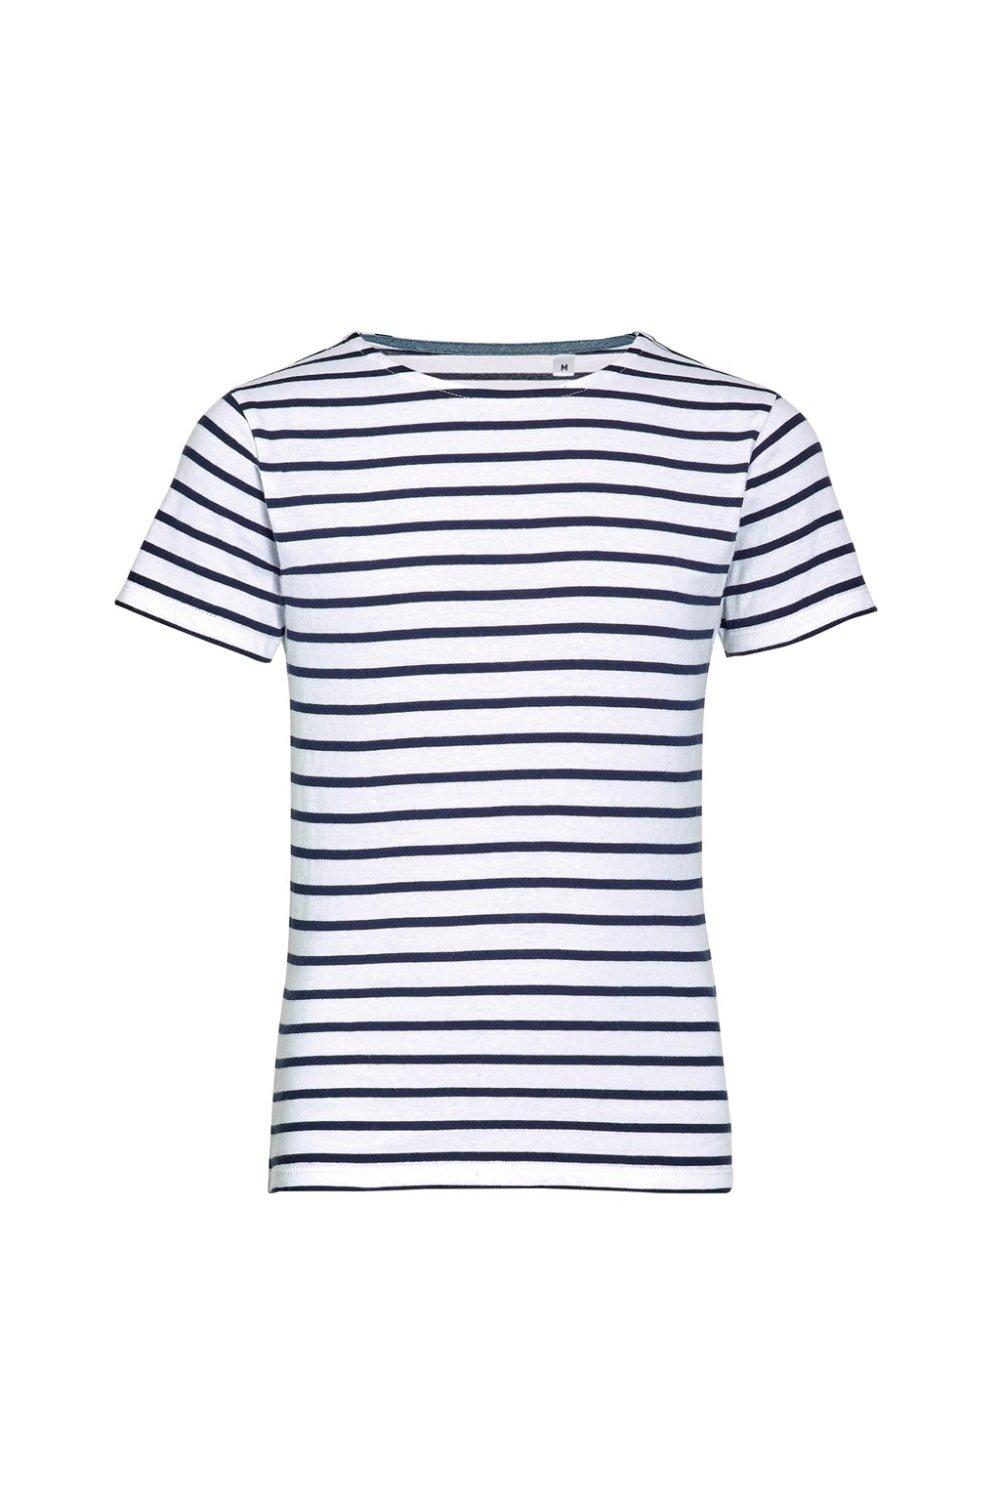 Miles Striped Short Sleeve T-Shirt